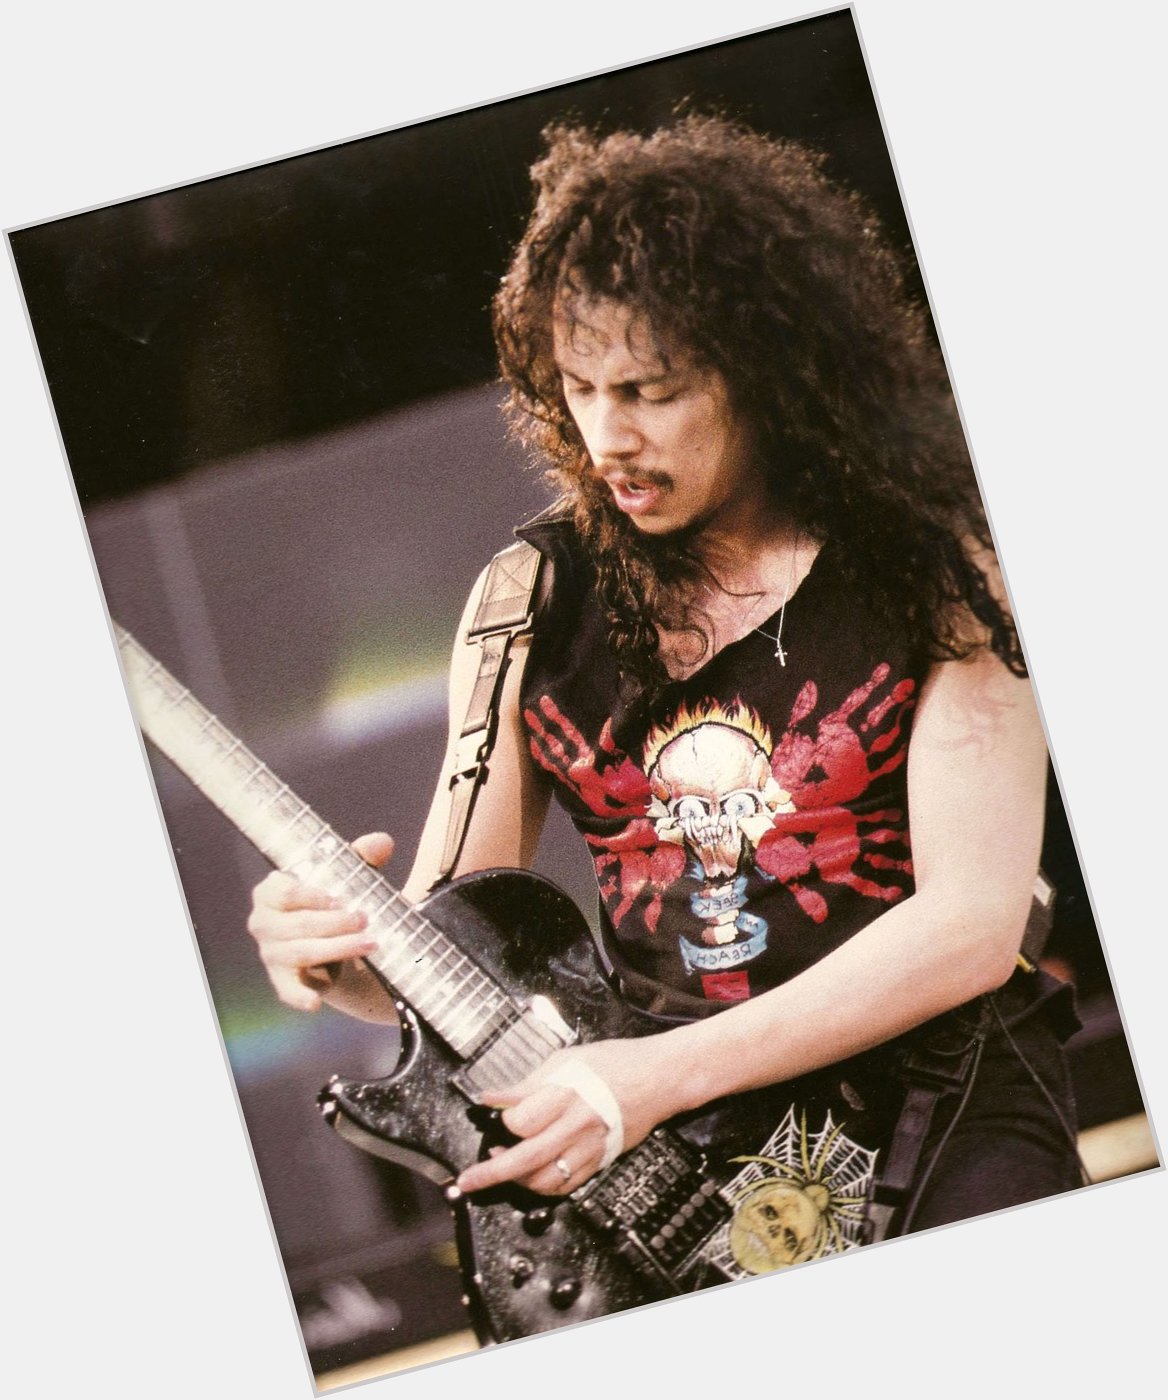 18th Of November Born in 1962 day HAPPY BIRTHDAY TO Kirk Hammett, Guitarist of Metallica 